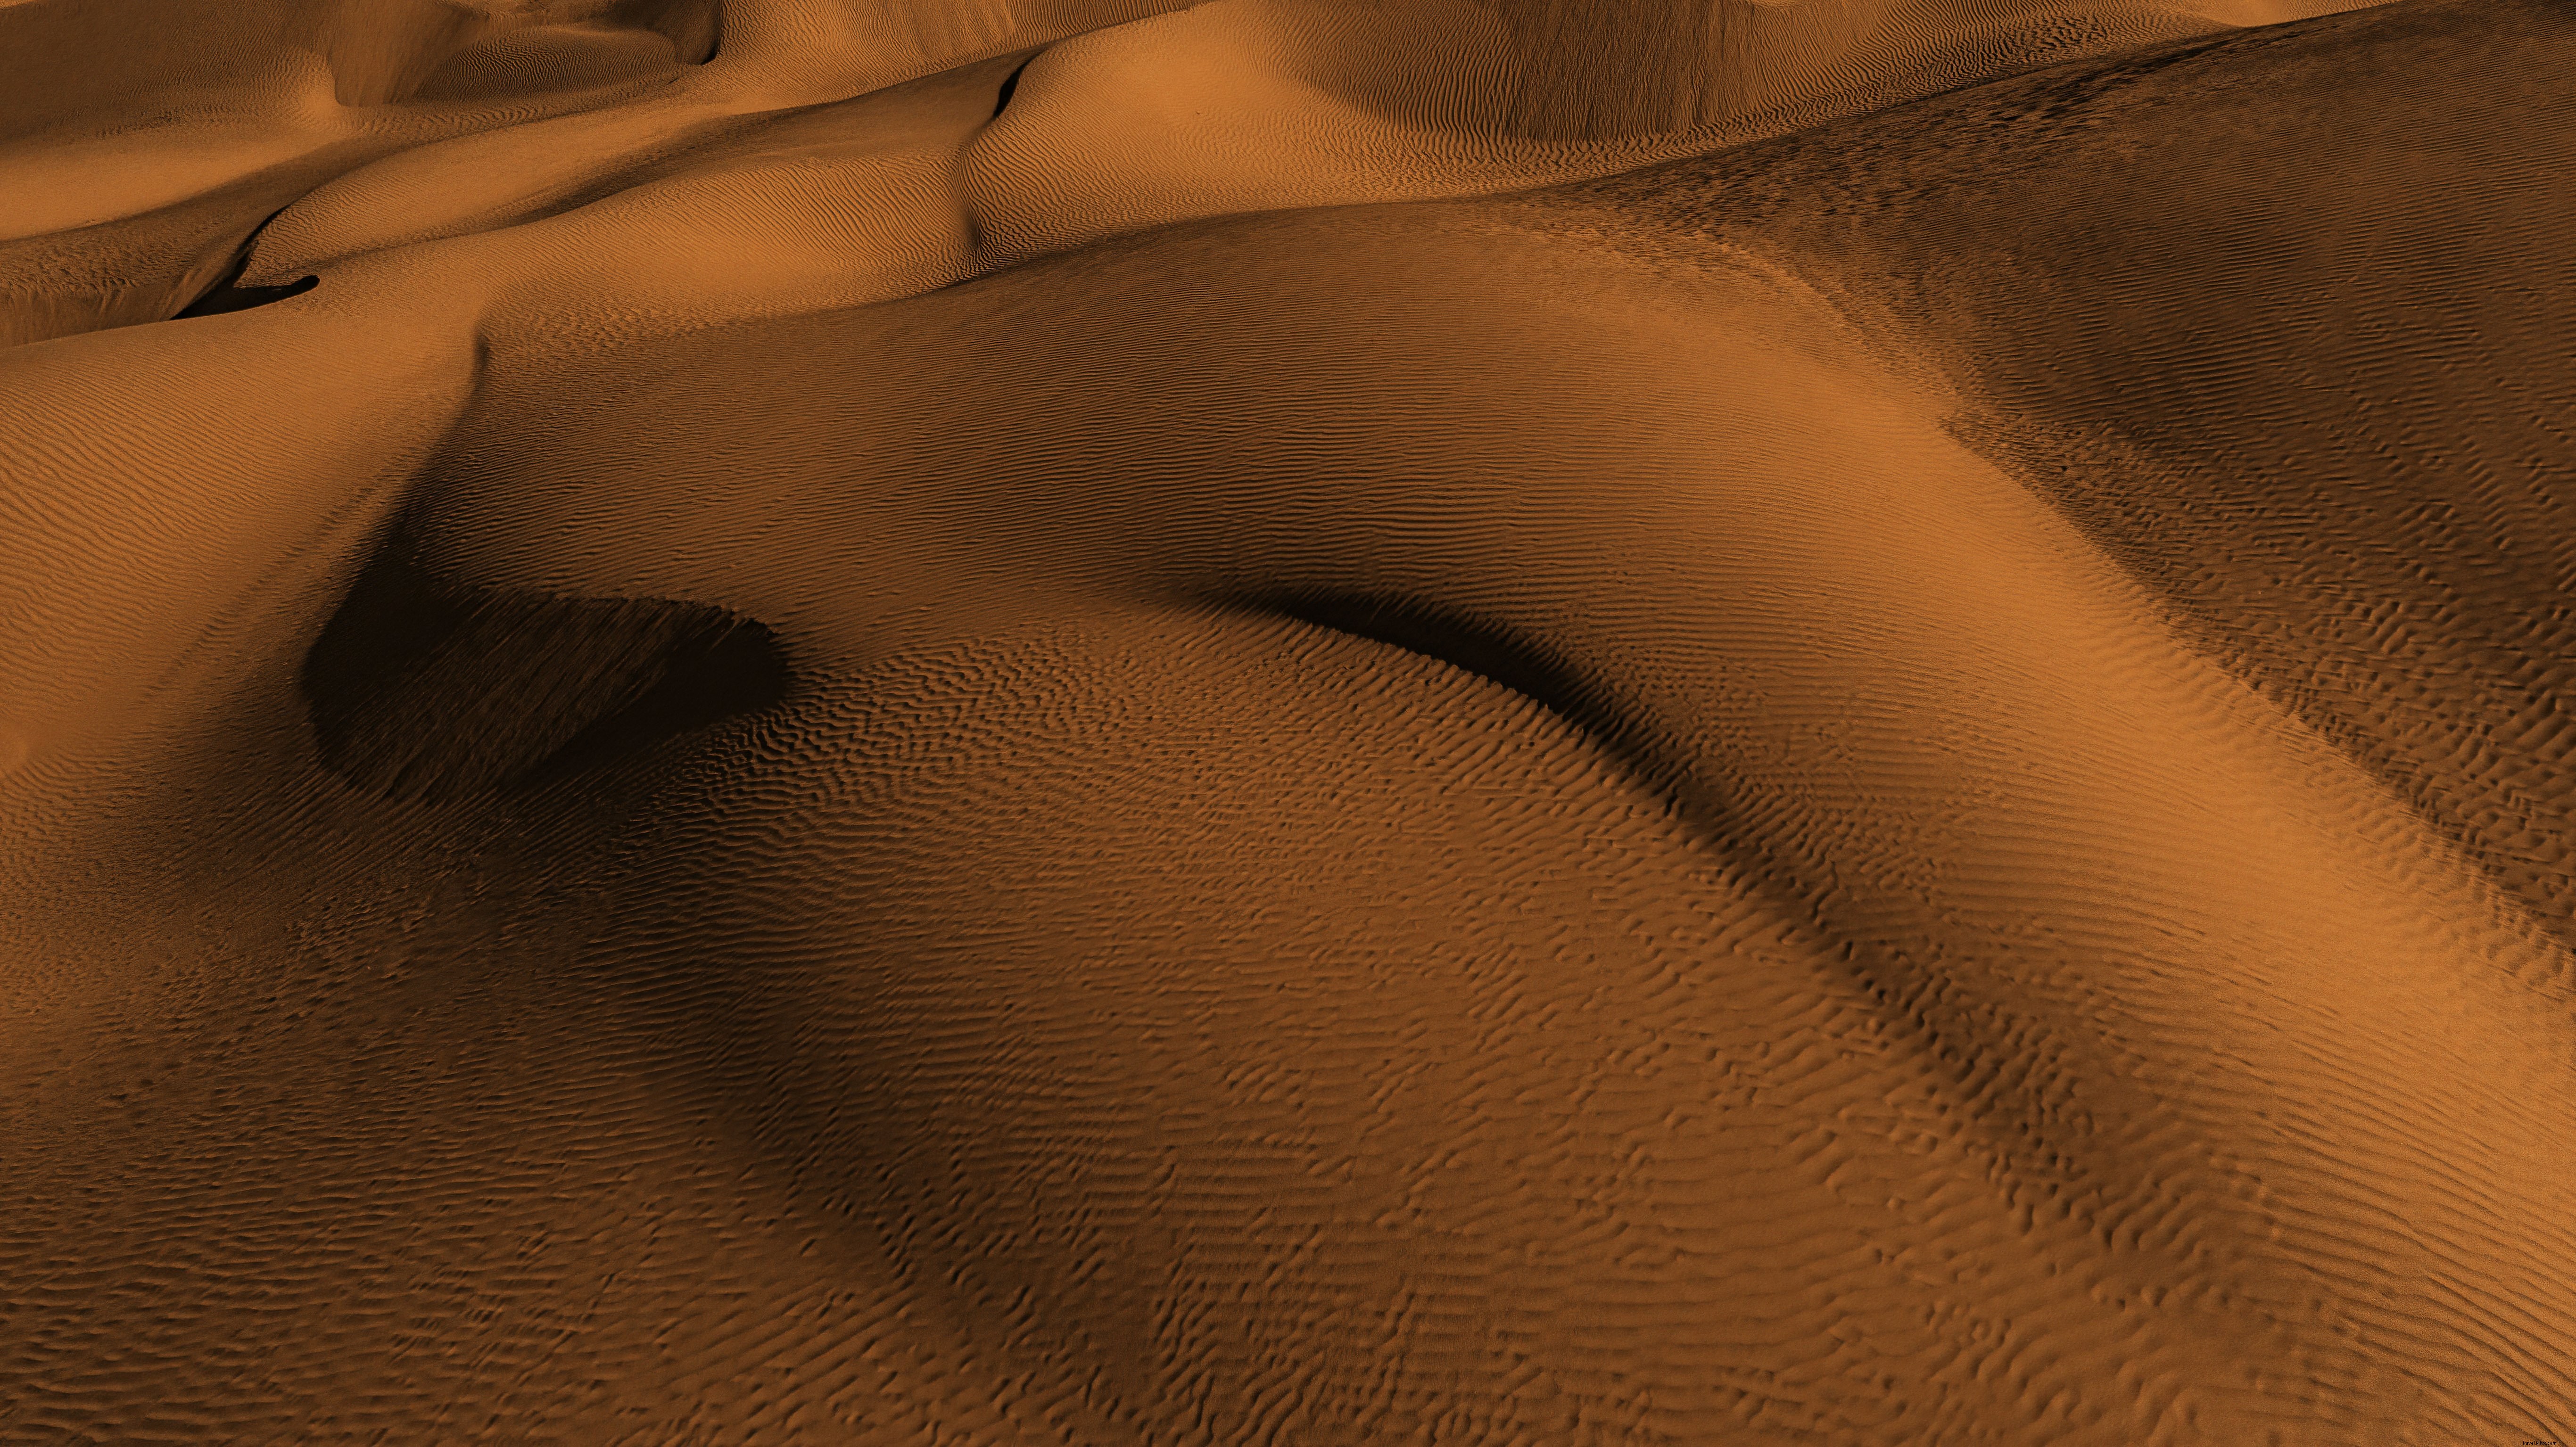 Foto de montanhas de areia laranja vibrante e textura ondulada 